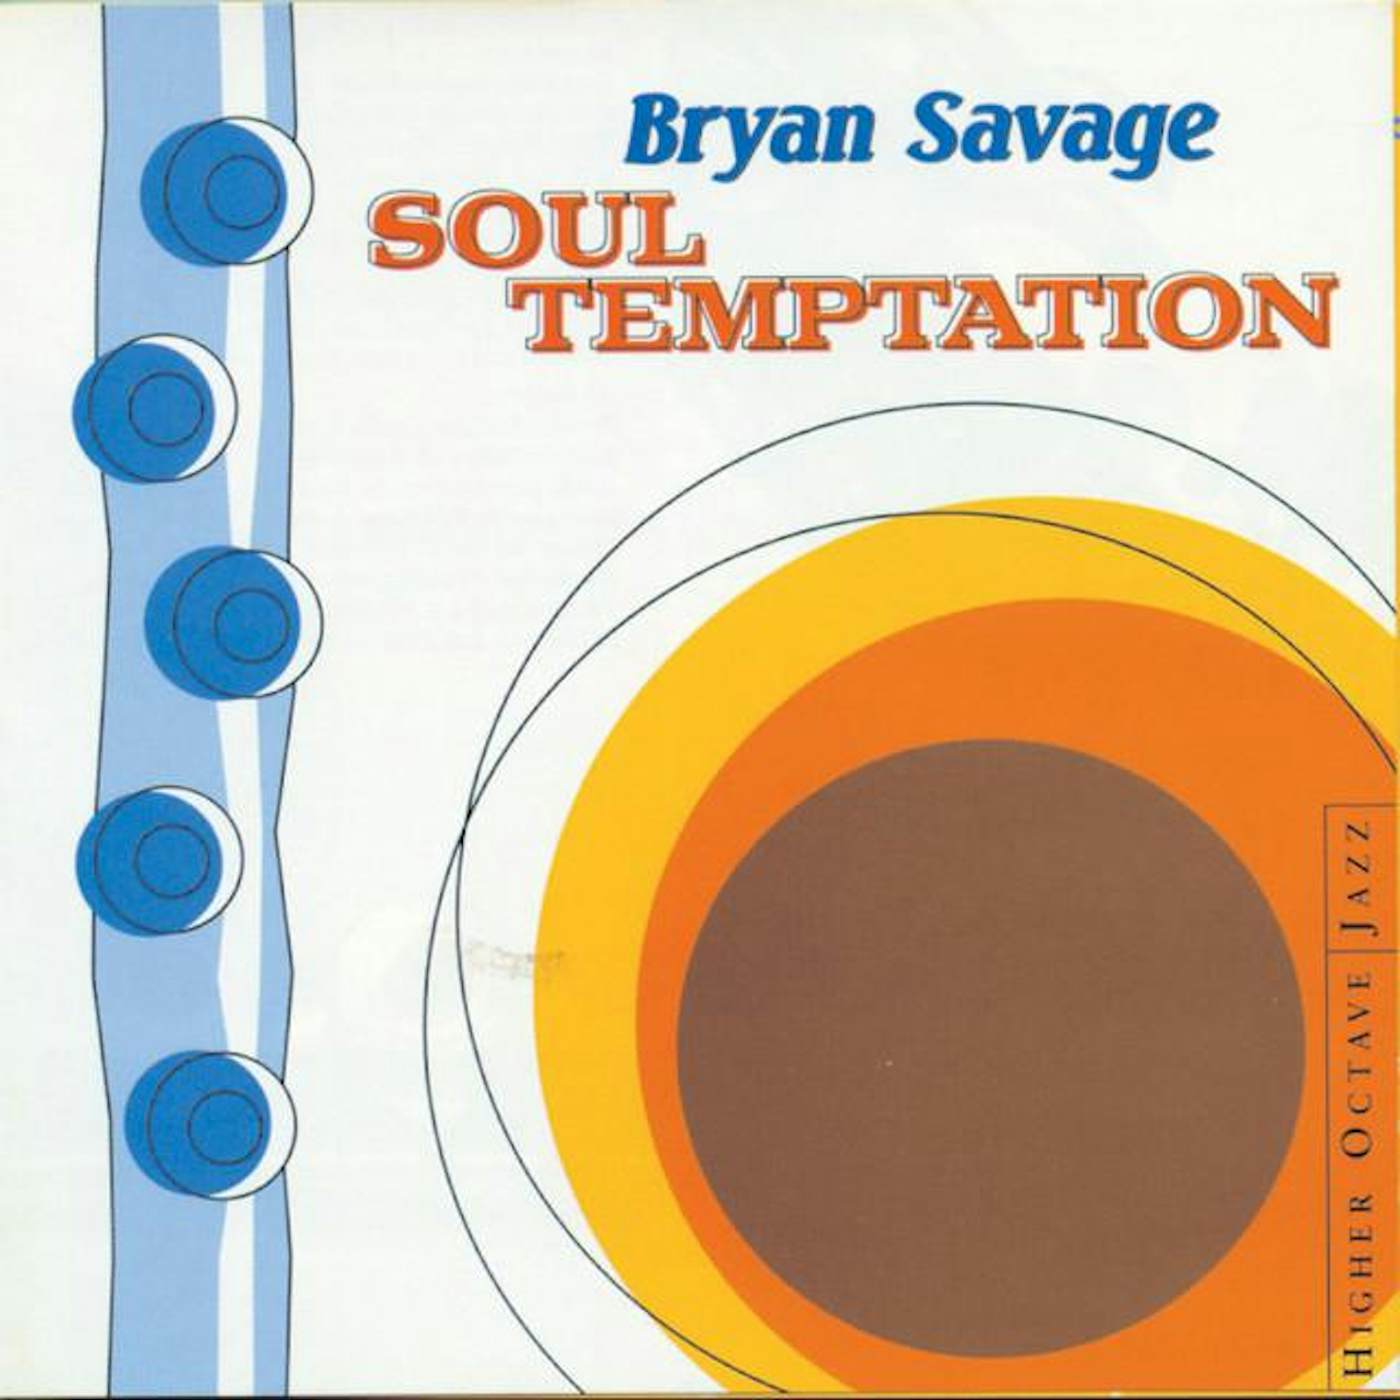 Bryan Savage